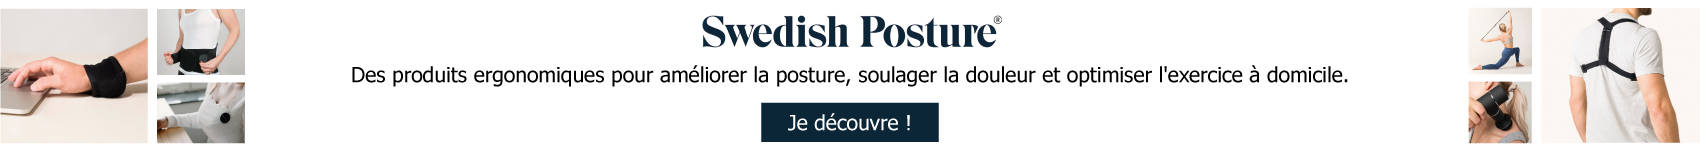 Web-banner---swedish-posture.jpg